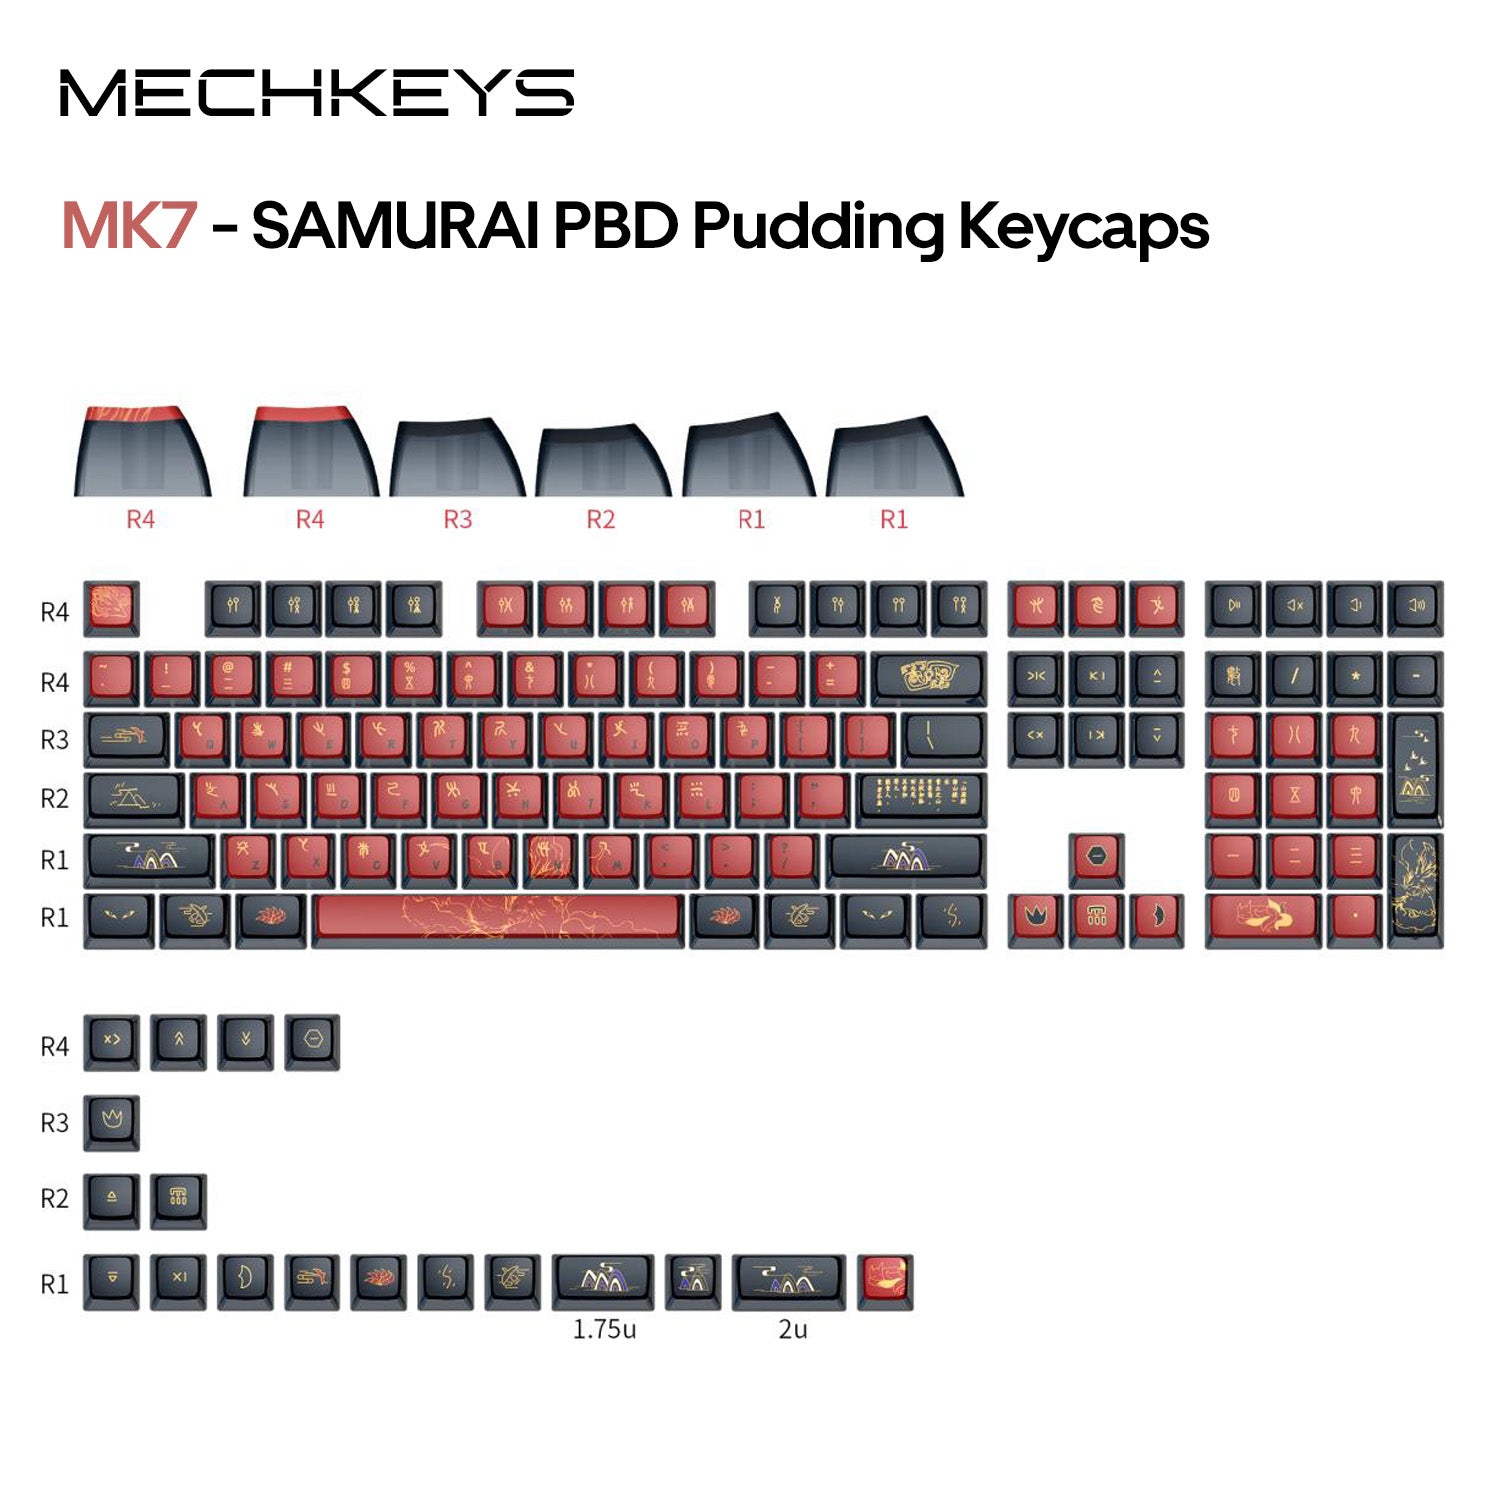 OVERCLOCK MECHKEYS SAMURAI PBT Pudding Keycaps